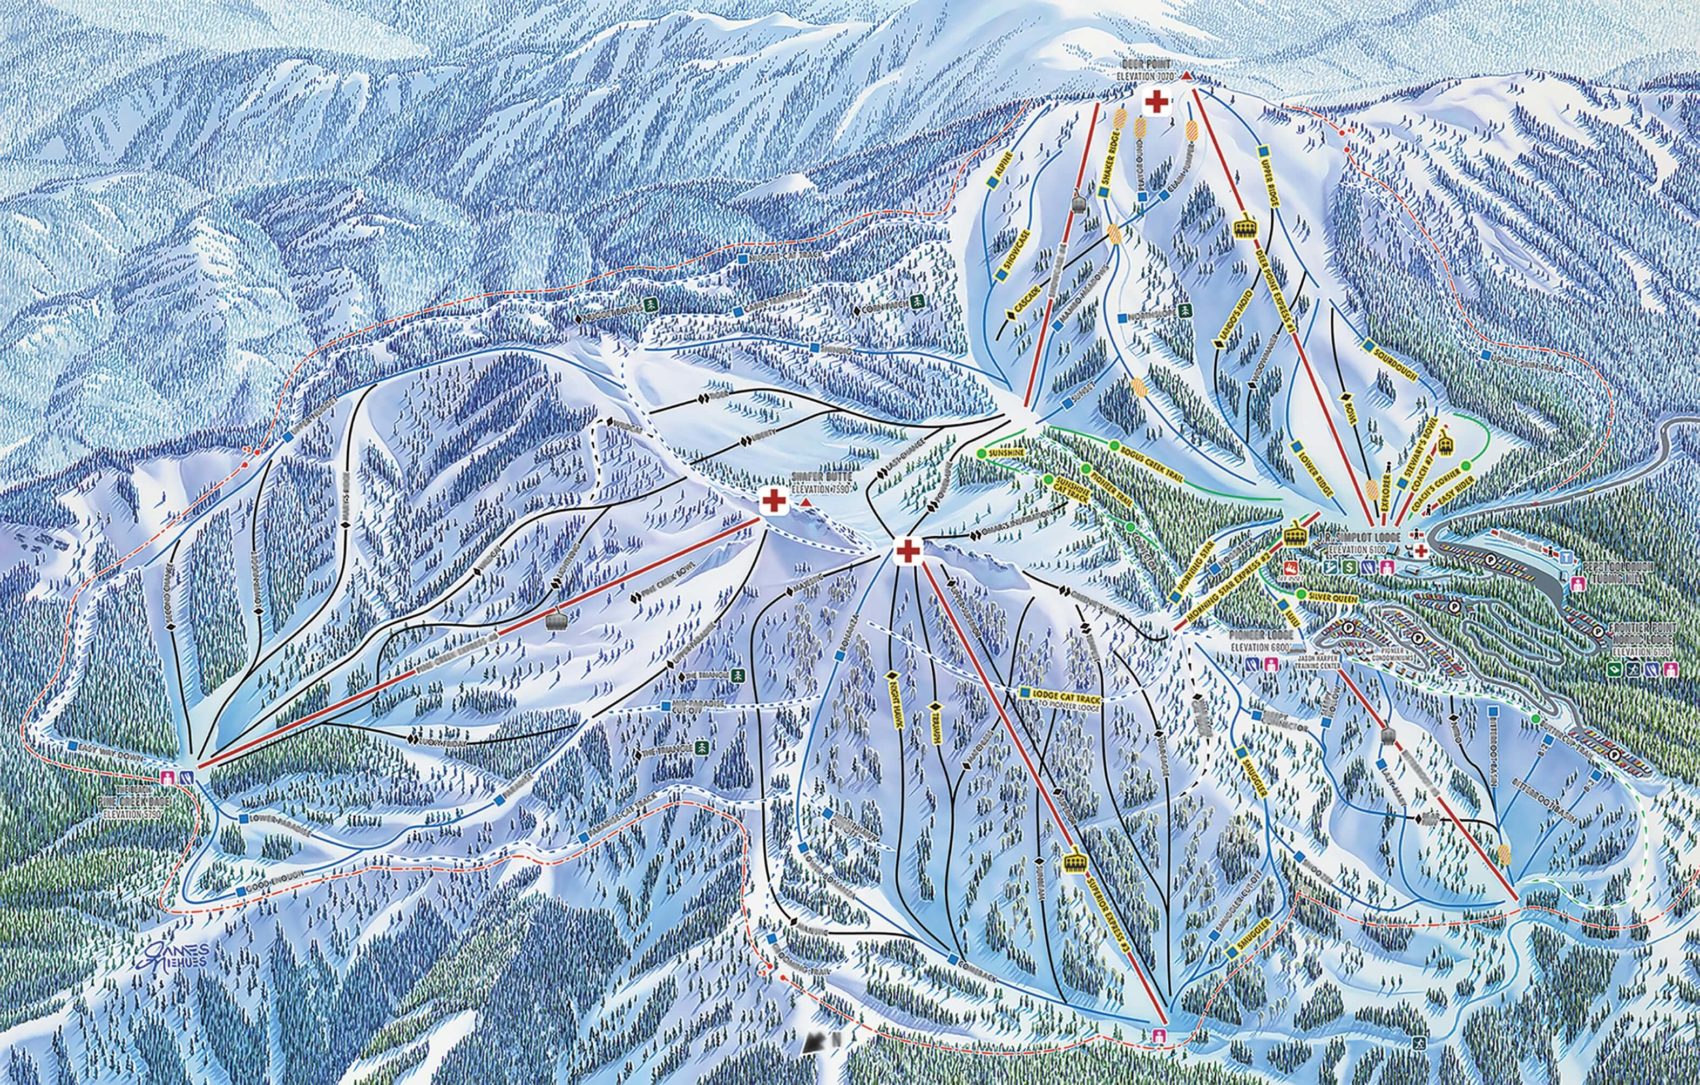 bogus ski trail map 